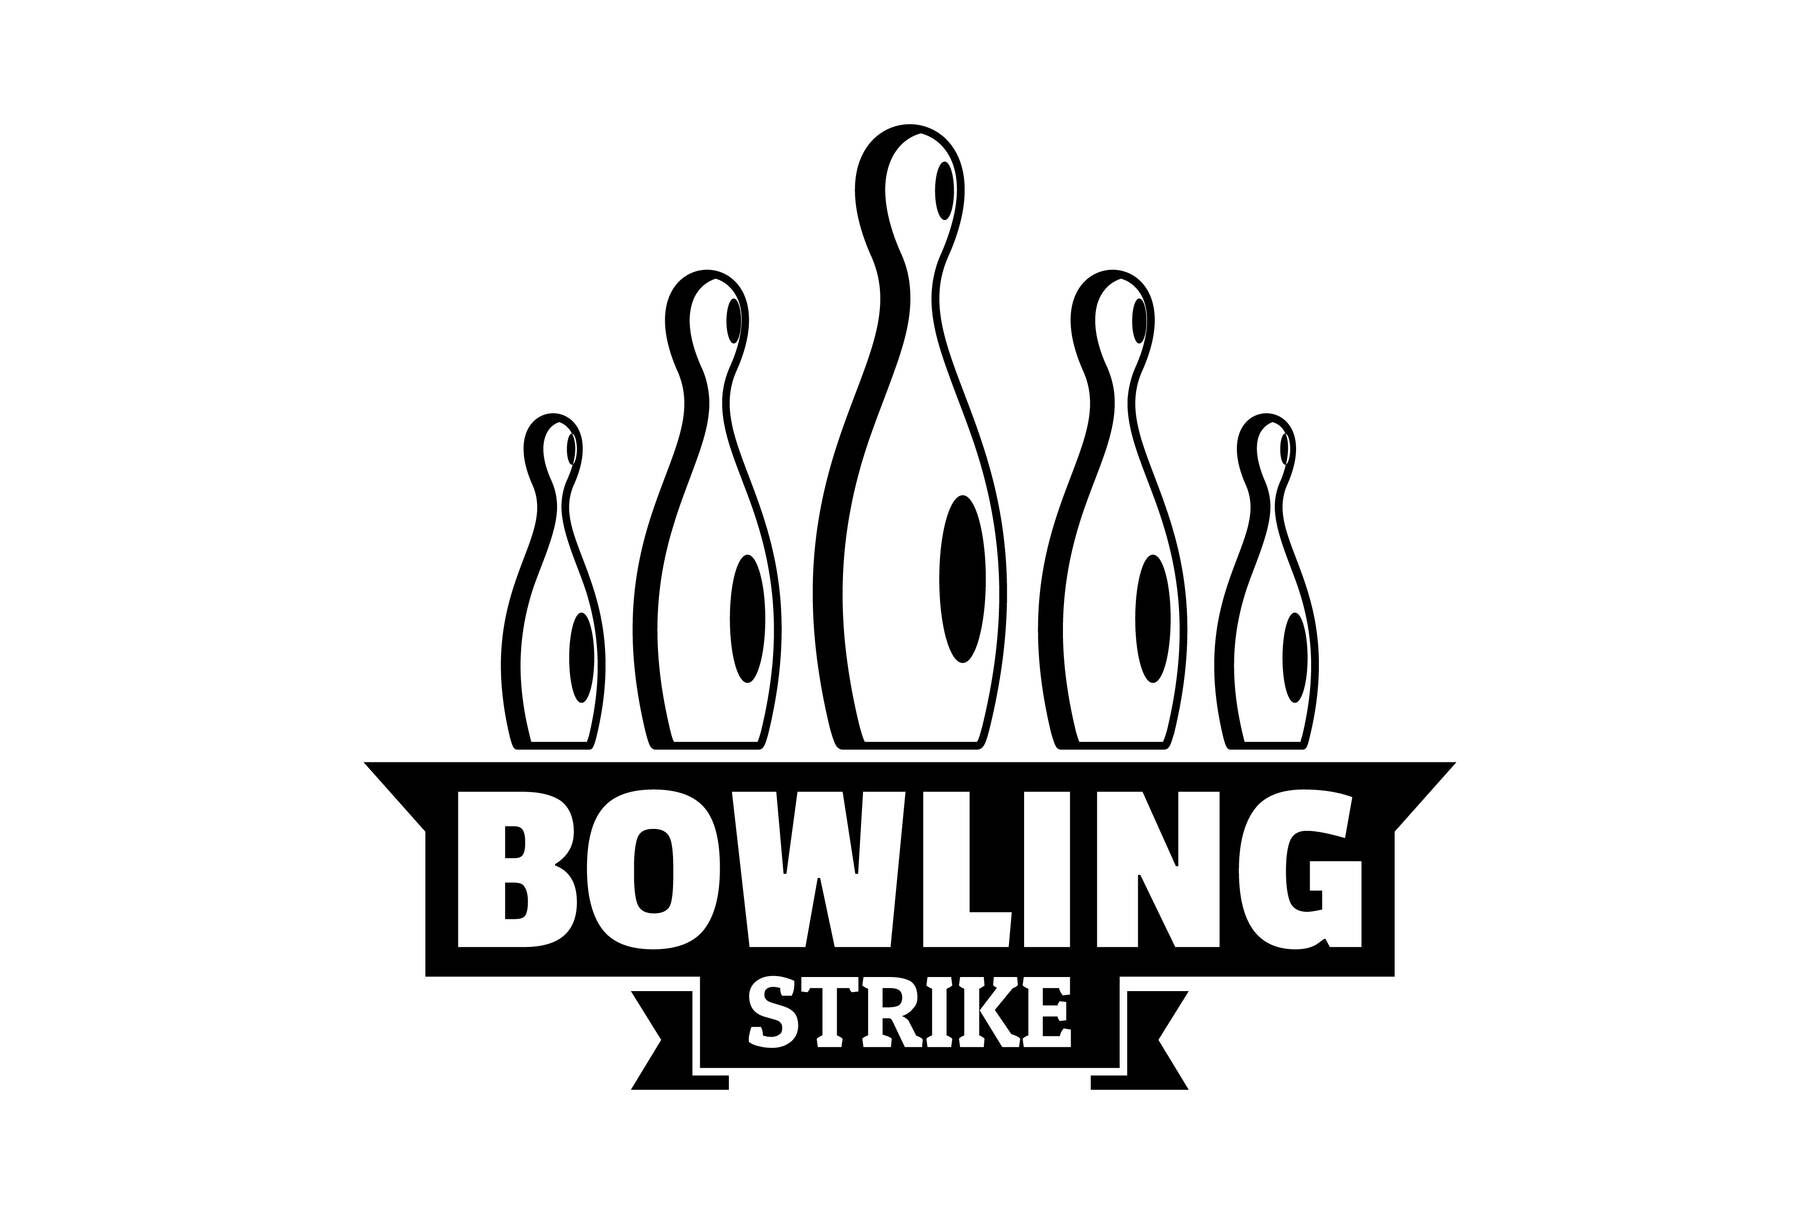 Bowling strike logo, simple style By Anatolir56 | TheHungryJPEG